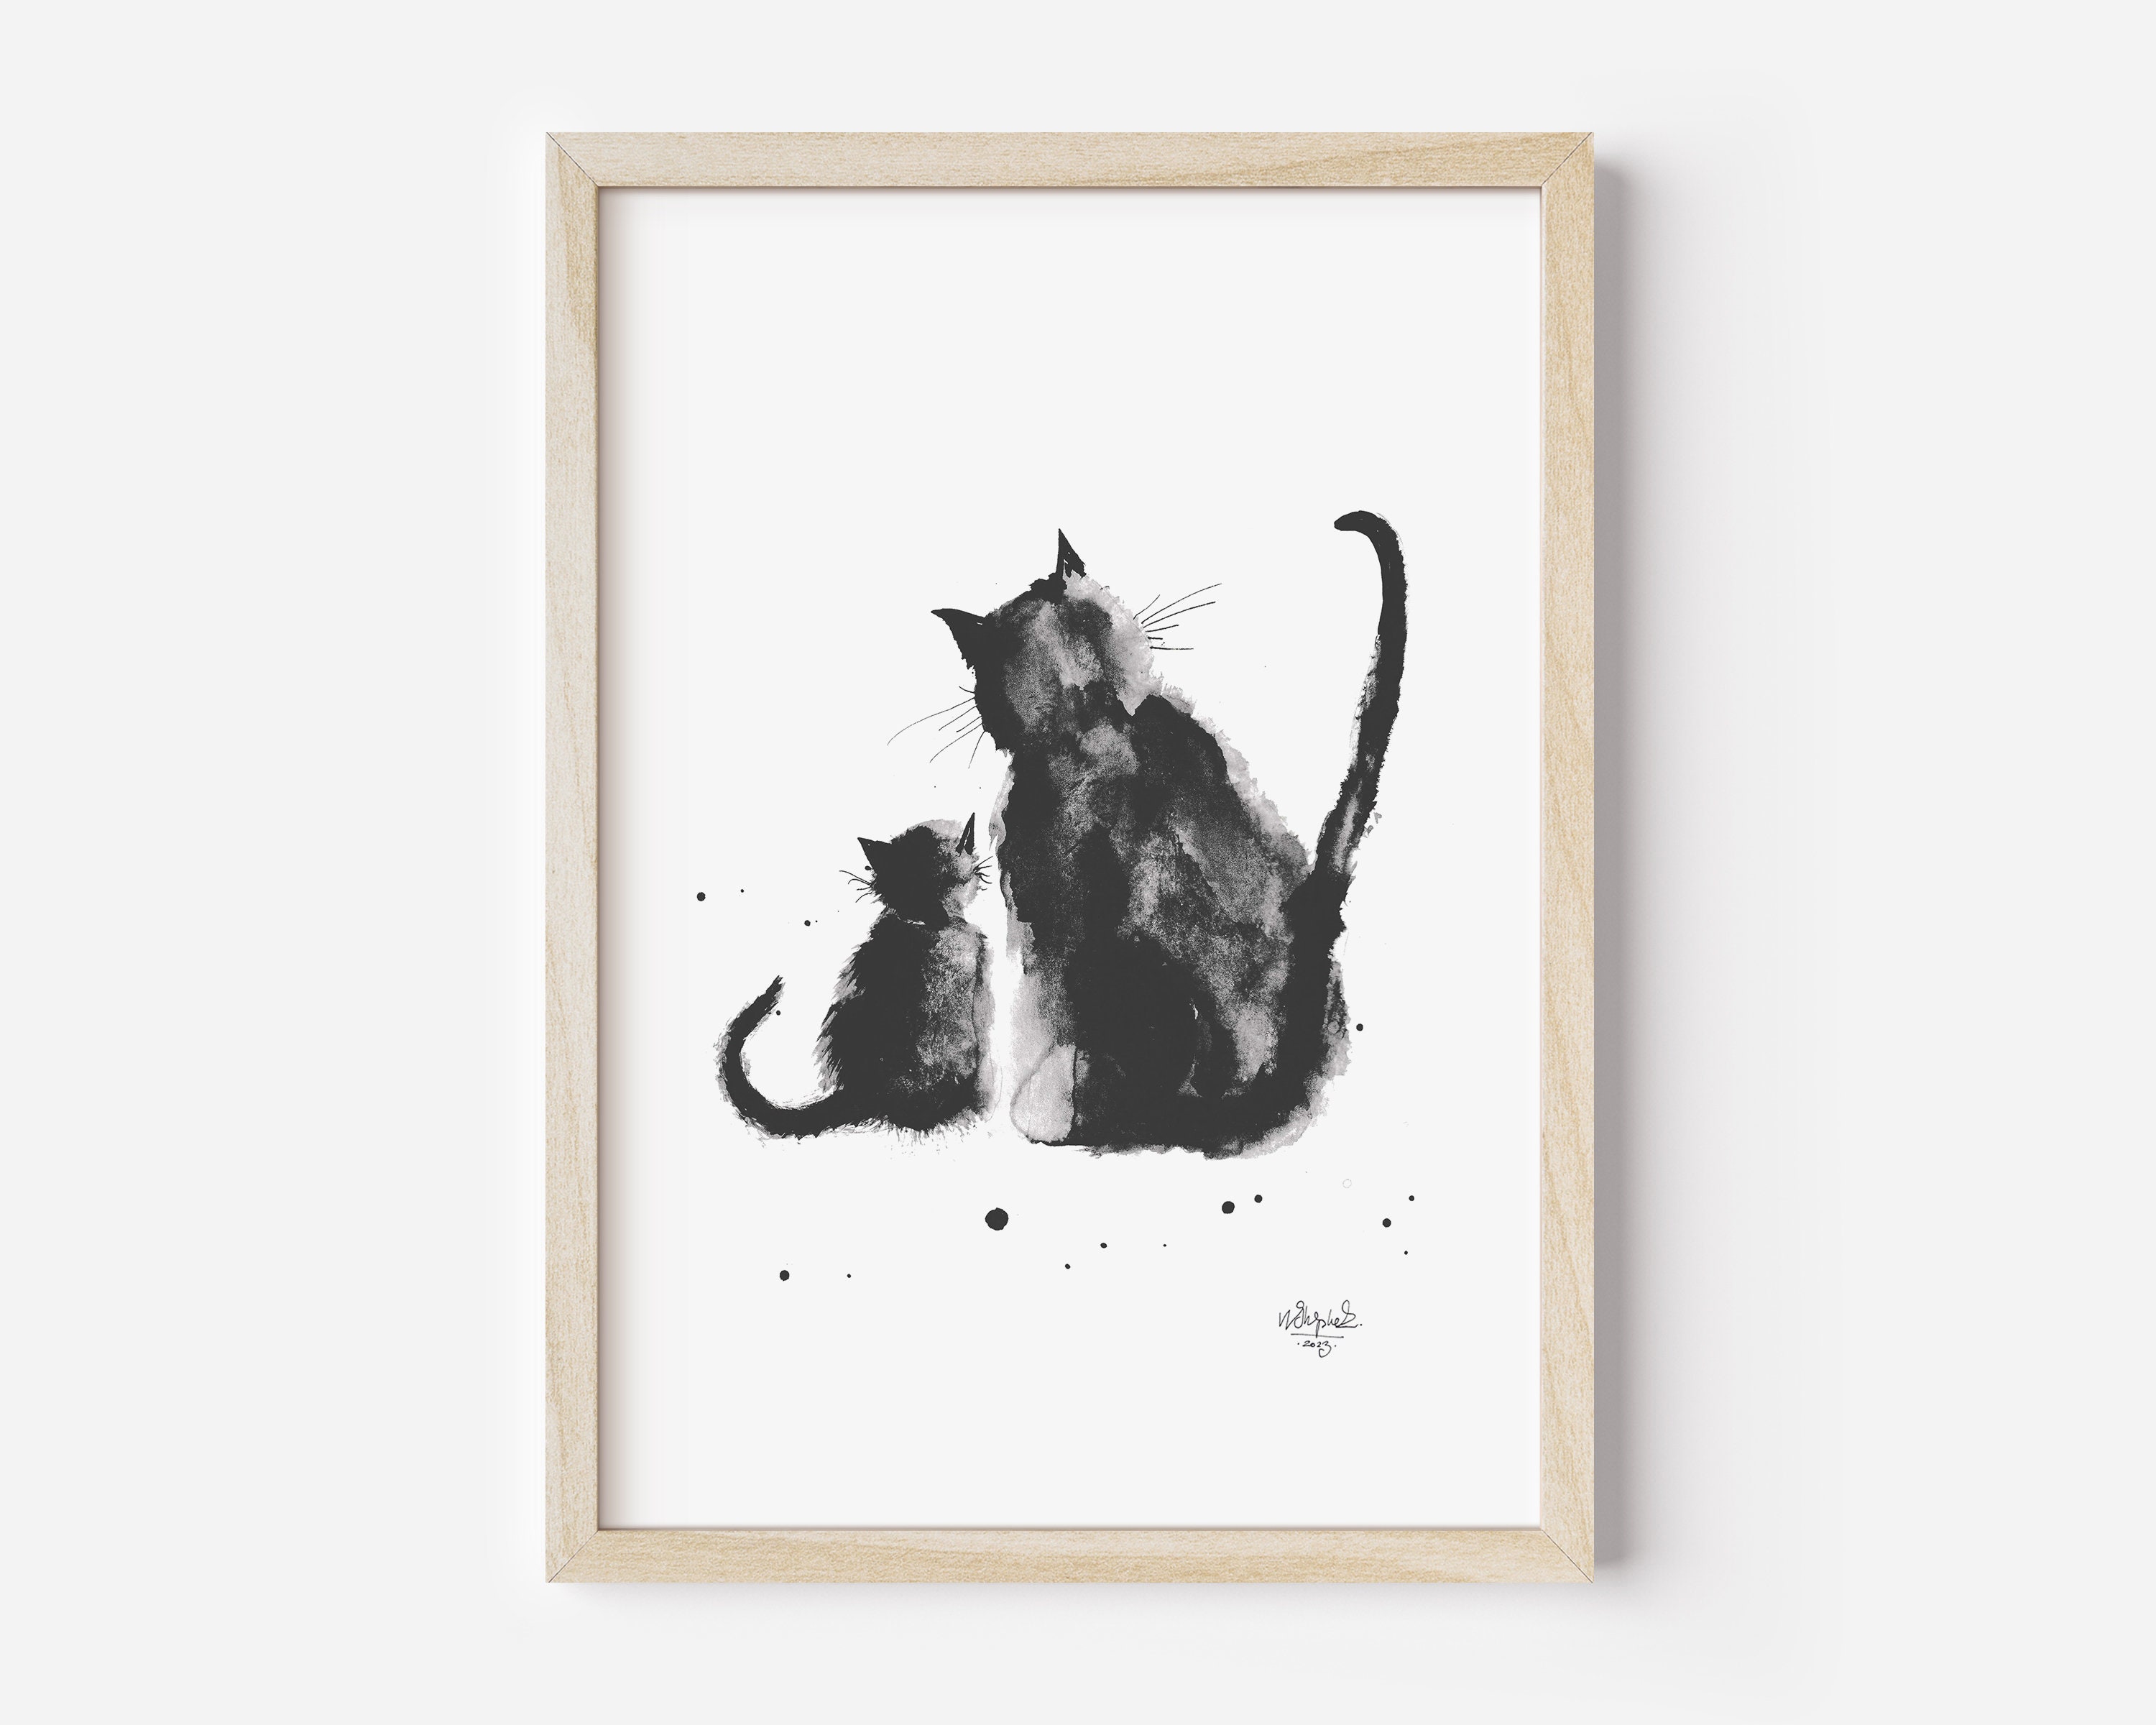 Download Twin Feline Harmony - Matching Cat Pfp Wallpaper